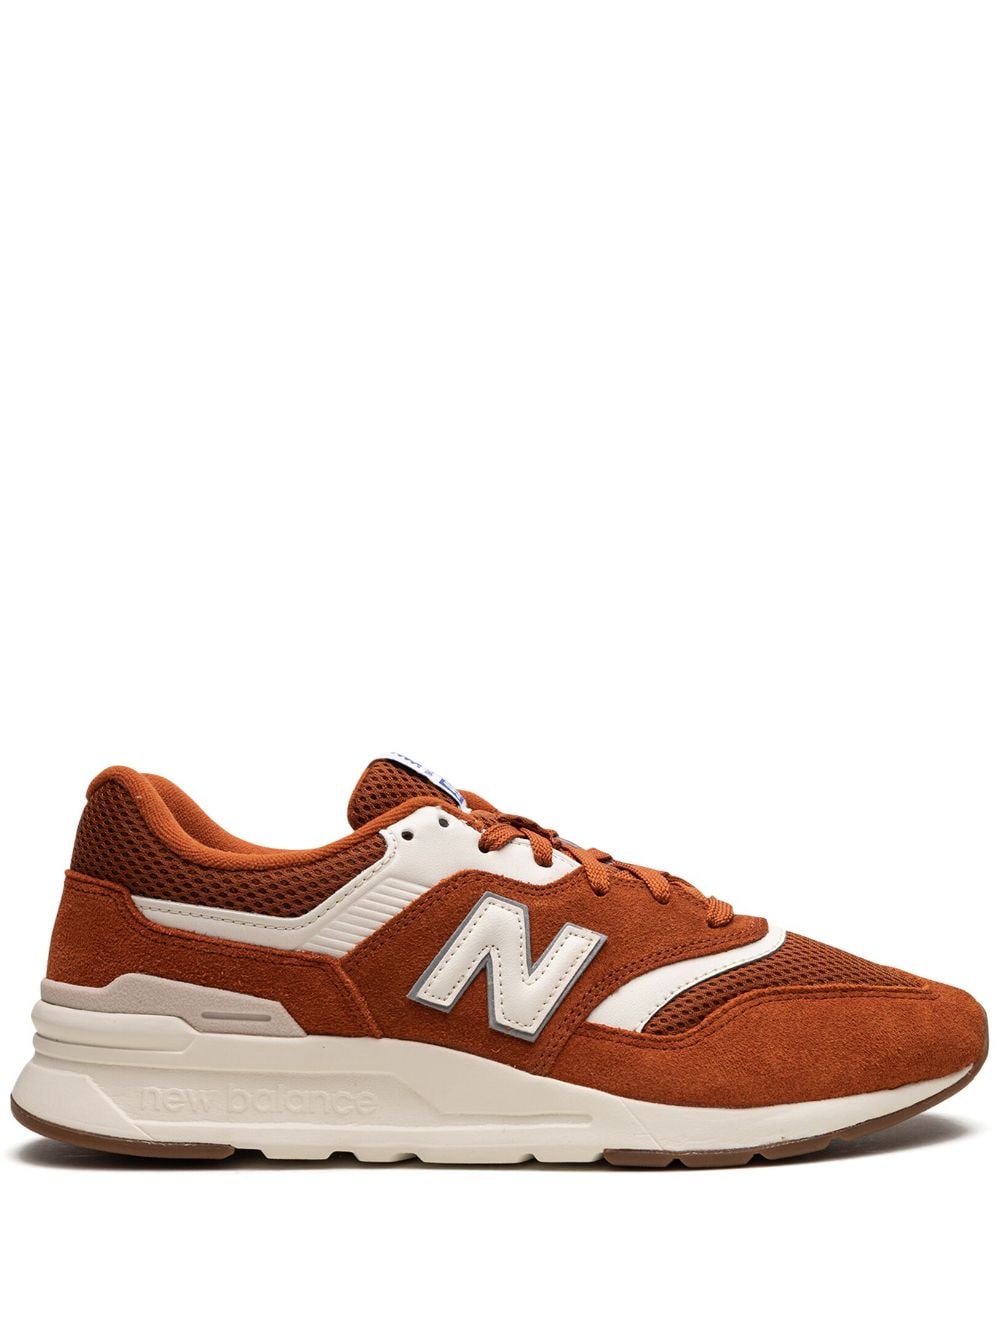 New Balance 997 "Rust" sneakers - Brown